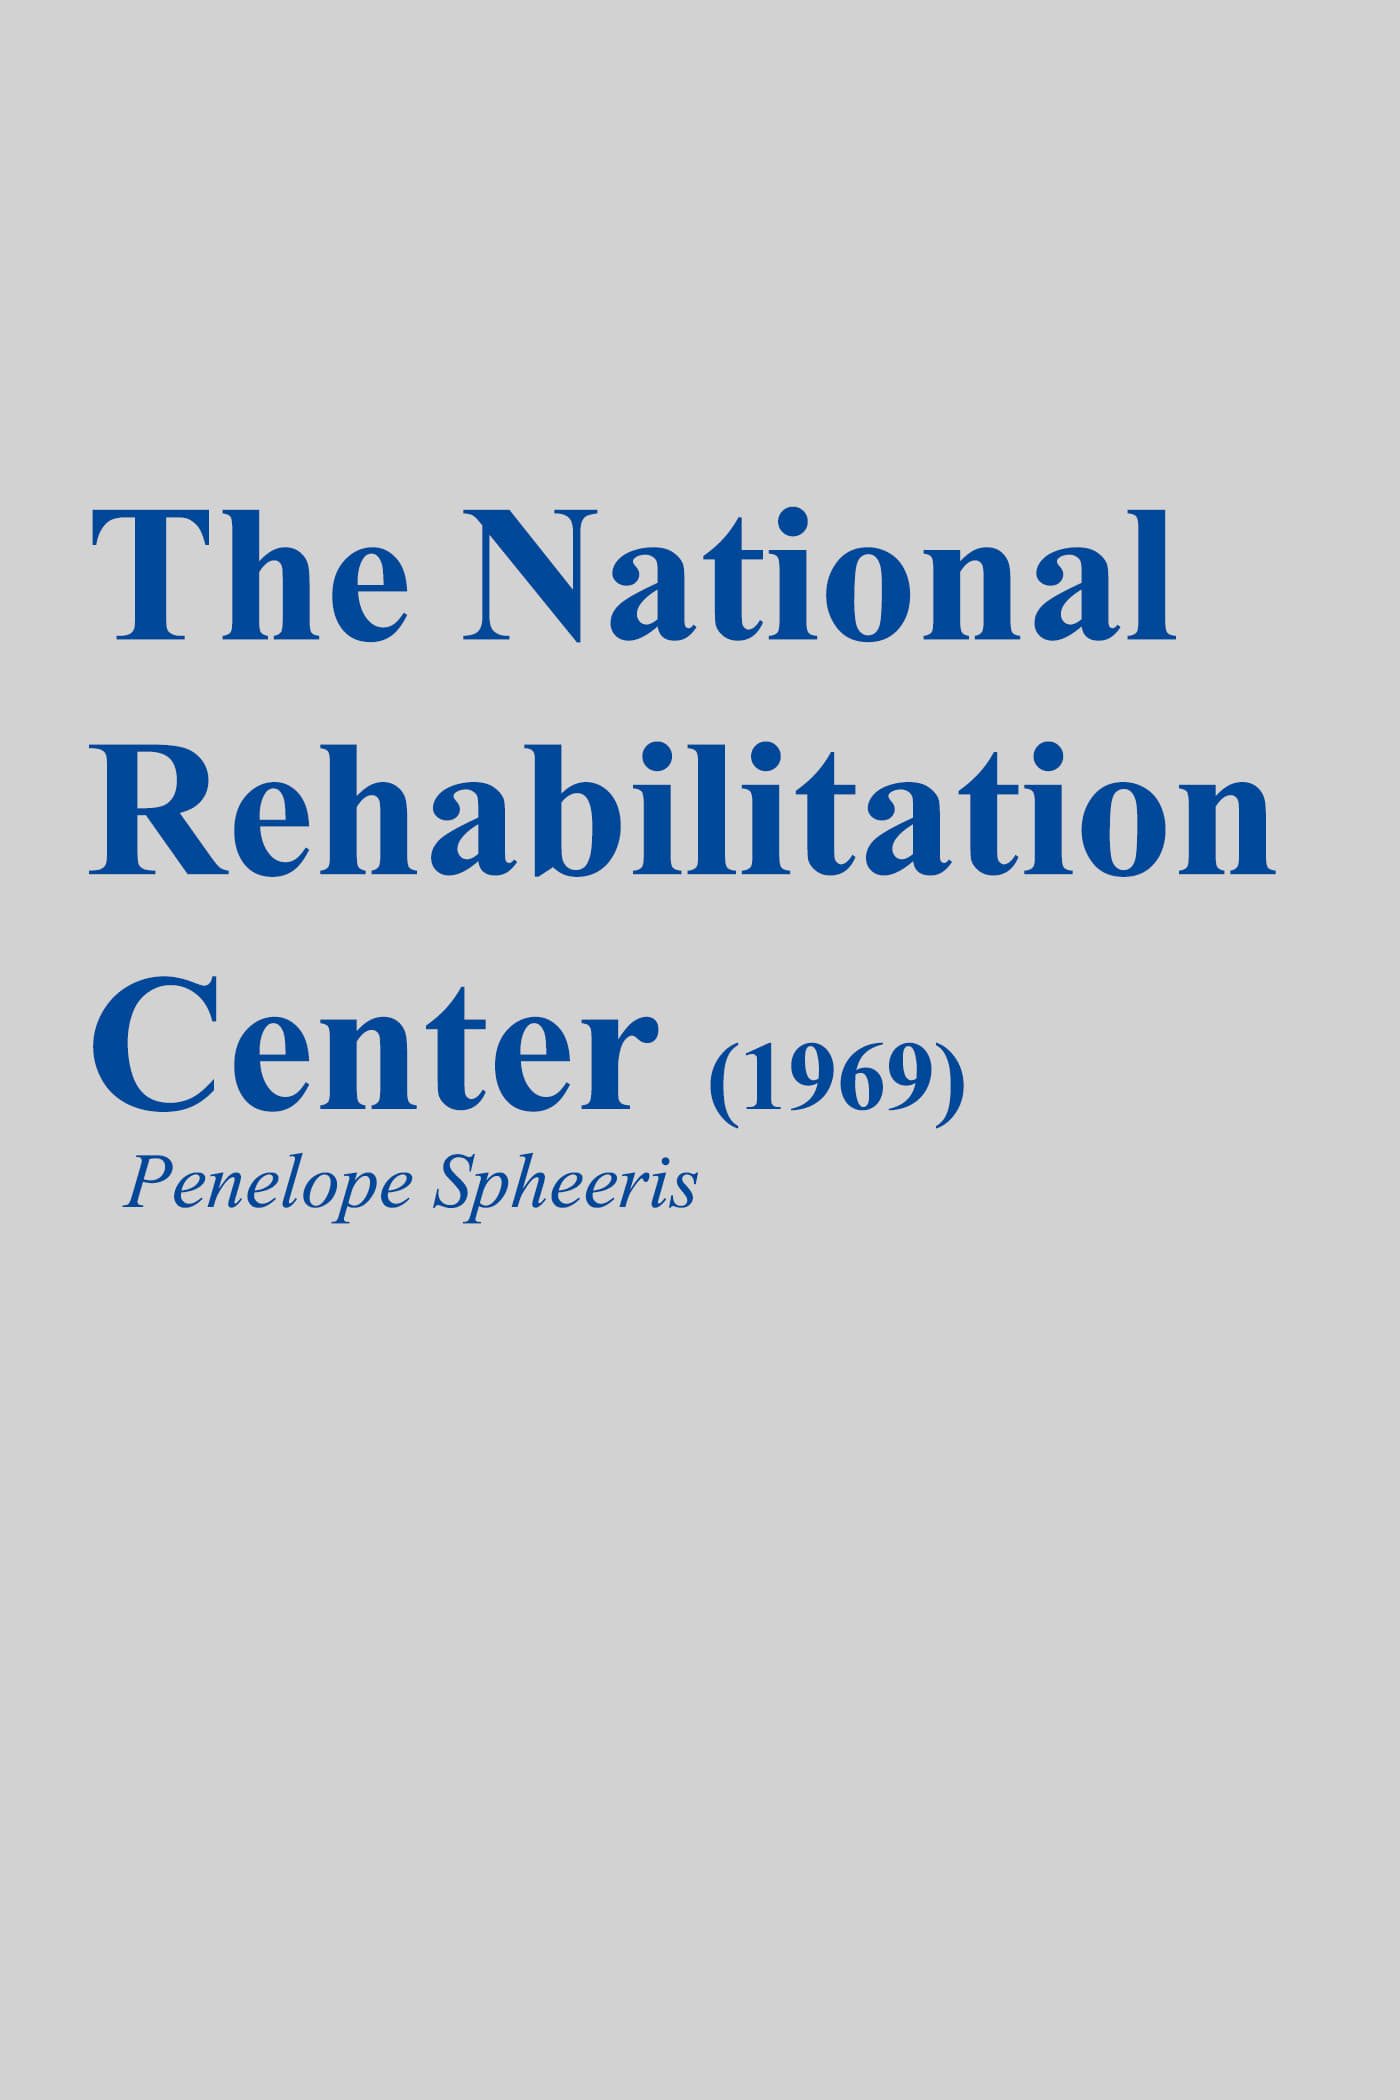 The National Rehabilitation Center